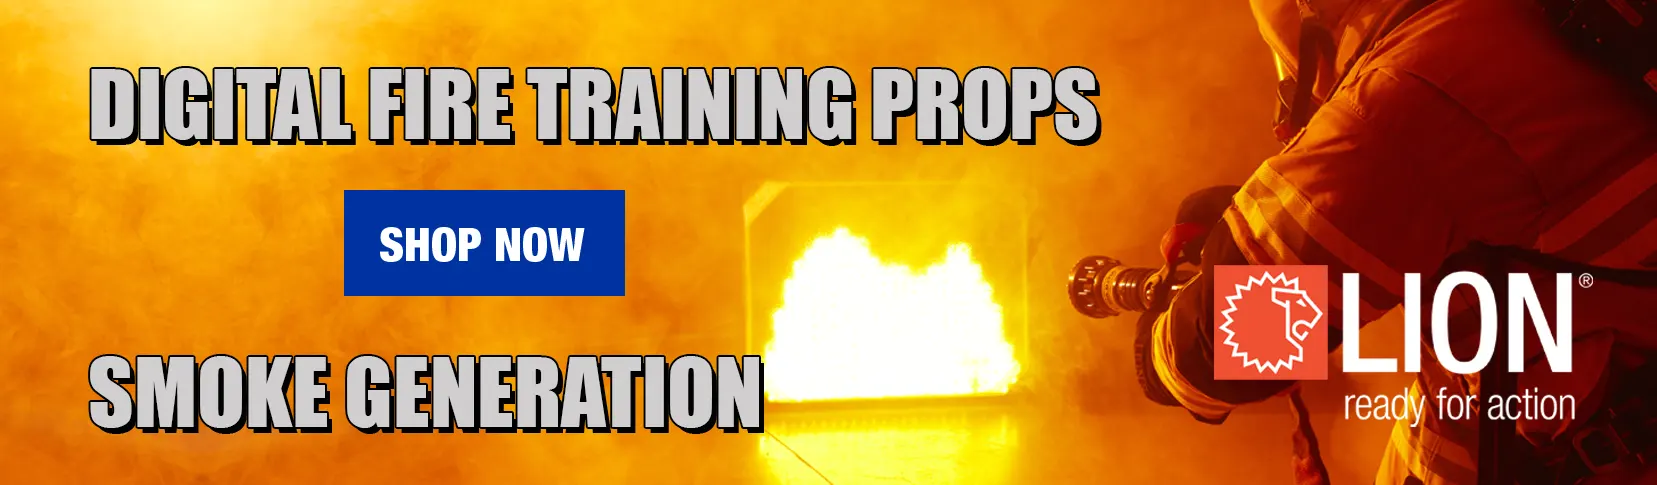 LION Fire Training Tools